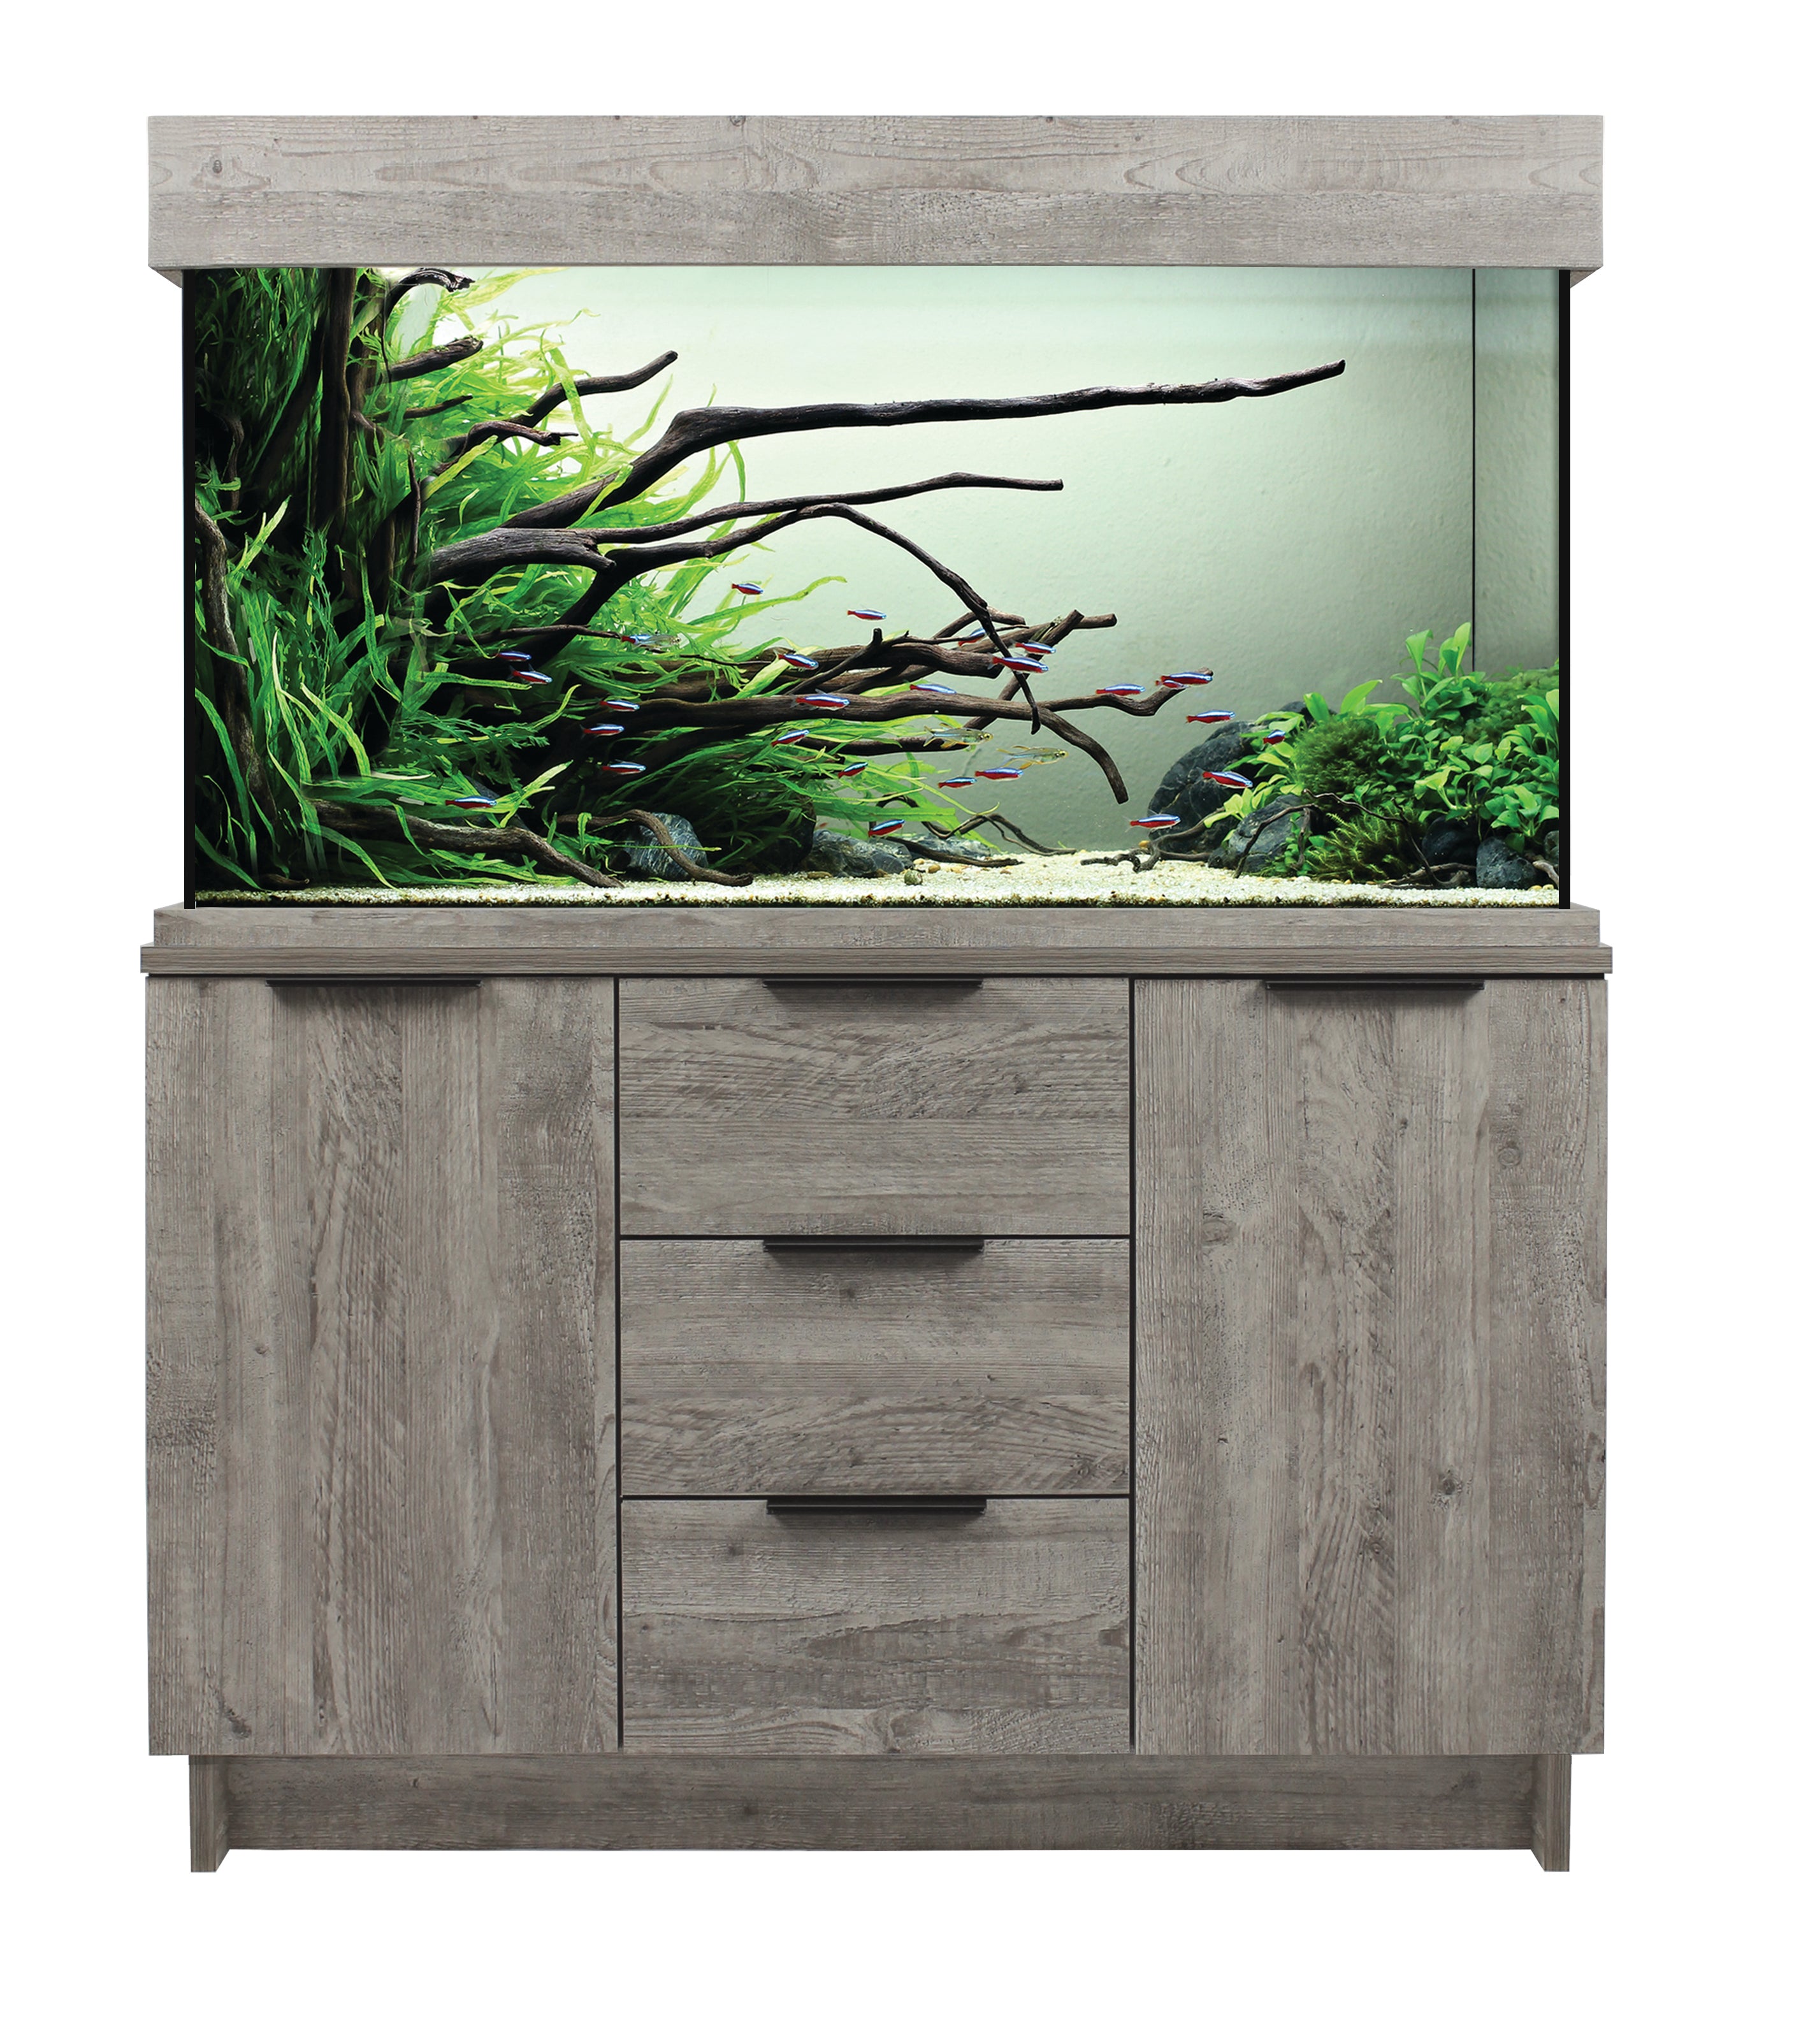 Aqua One OakStyle 230 Aquarium and Cabinet (Urban)